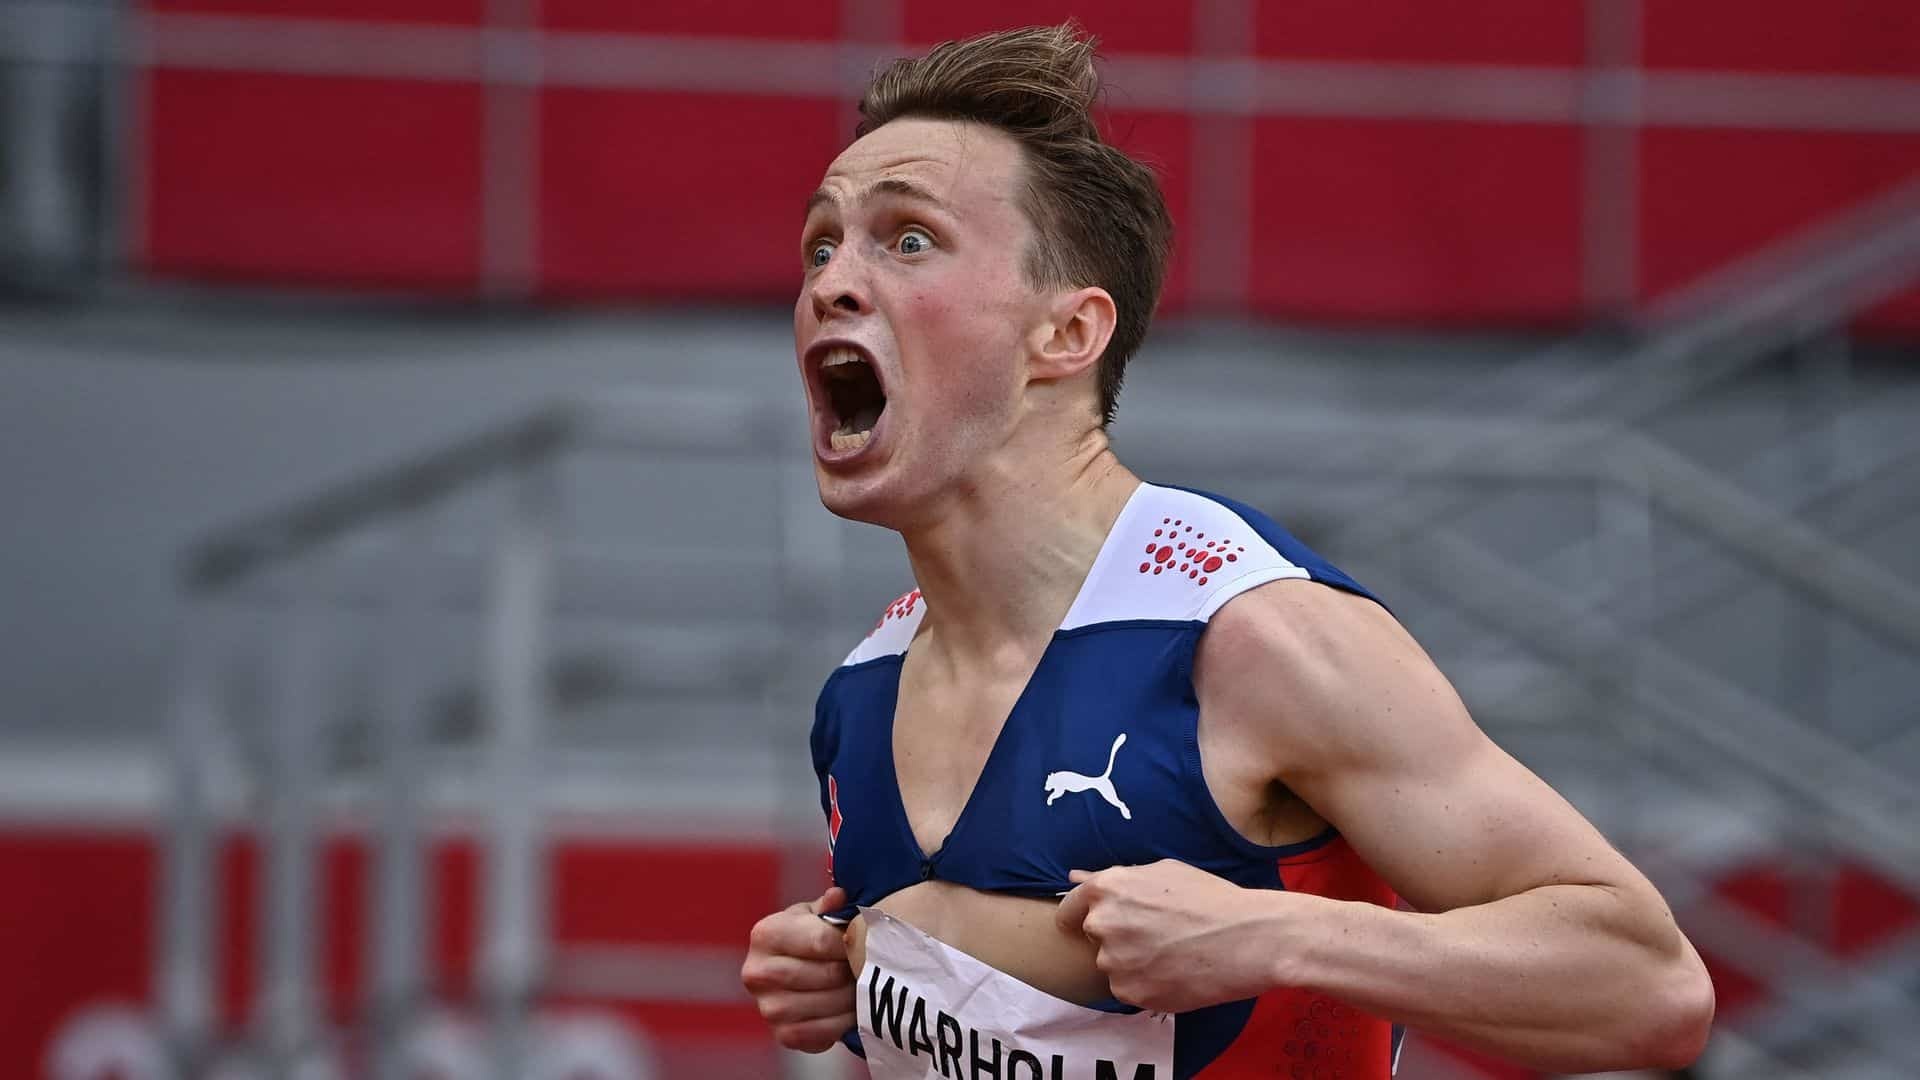 Karsten Warholm, Olympics, Sub-46 seconds, 400m hurdles, 1920x1080 Full HD Desktop